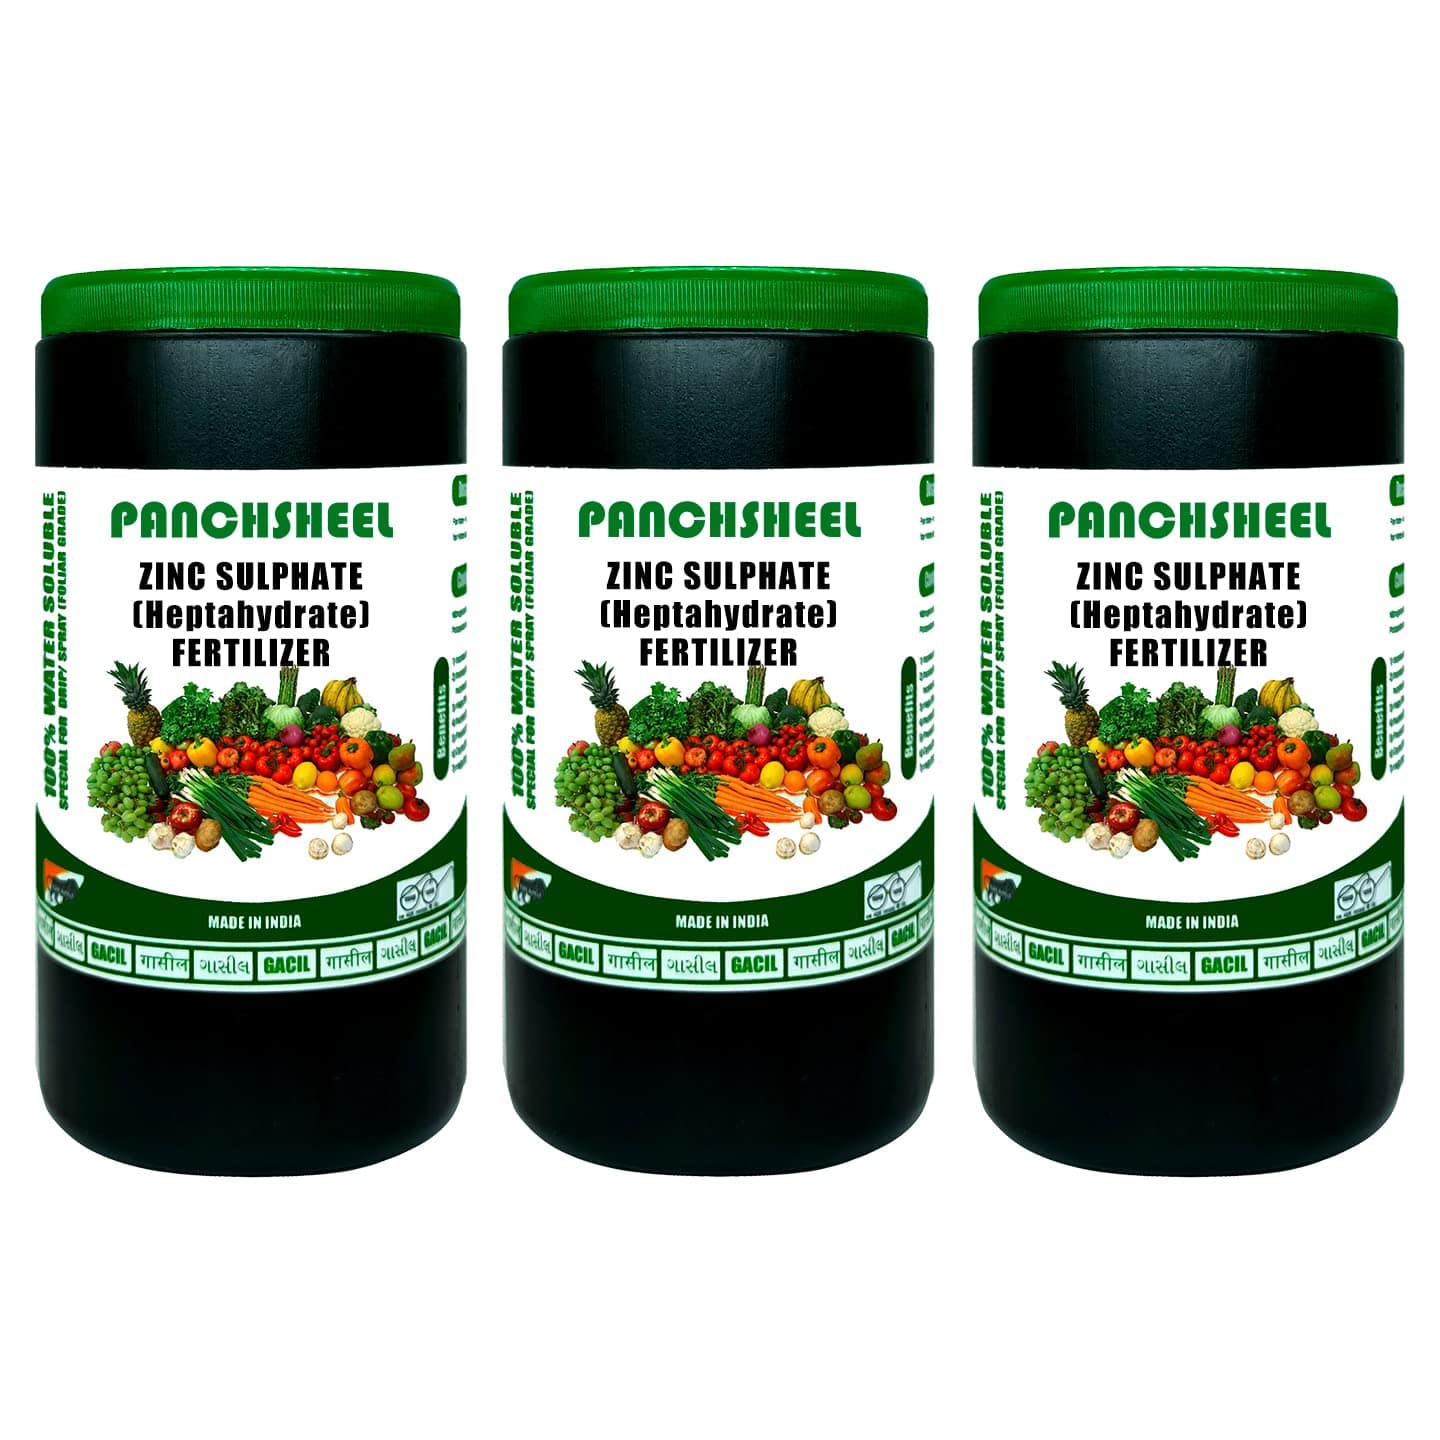 Panchsheel Super Zinc Sulphate Micronutrient Fertilizer (3 Kgs)